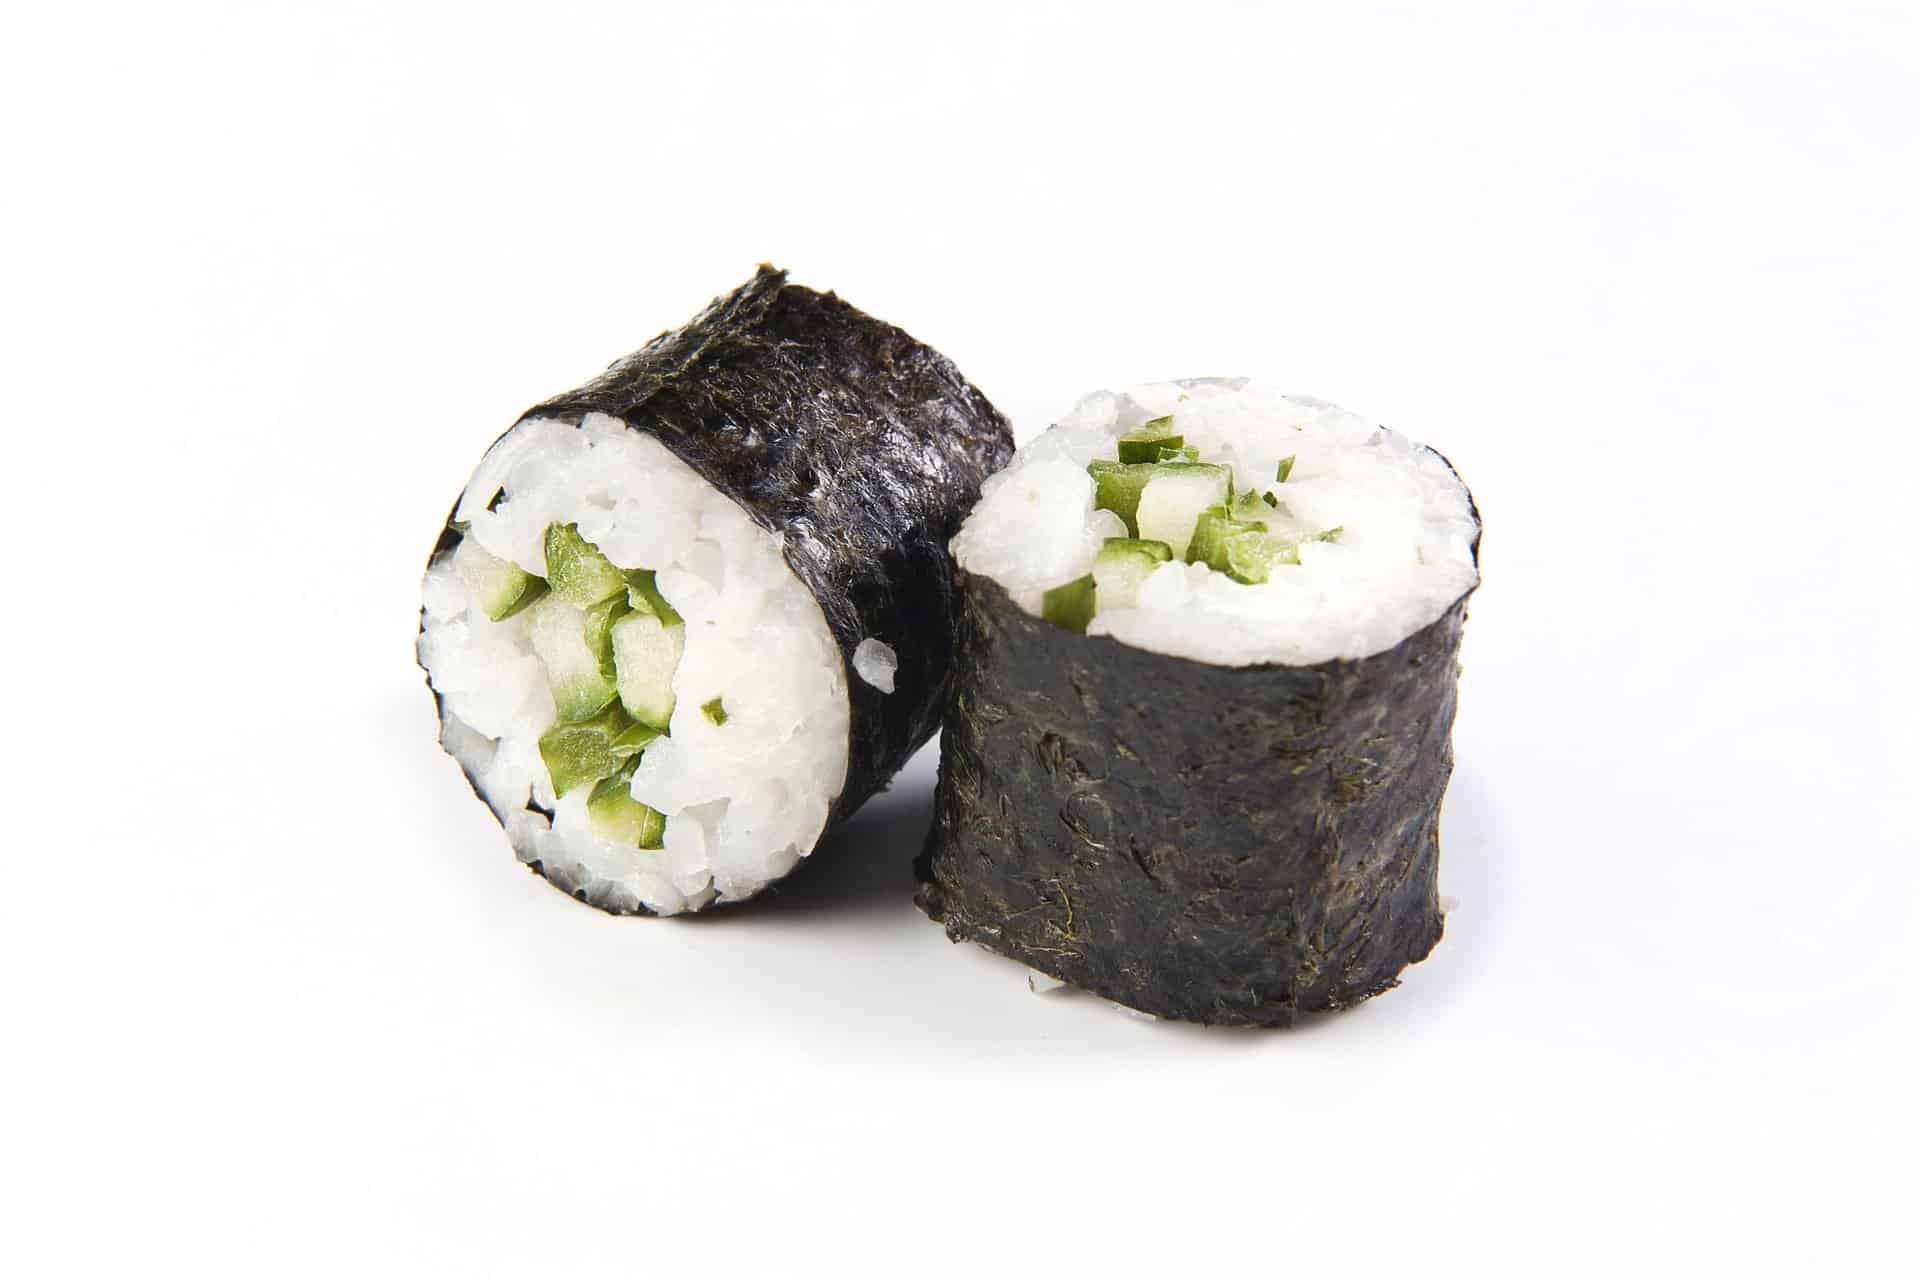 Healthy recipes: Delicious sushi nori rolls